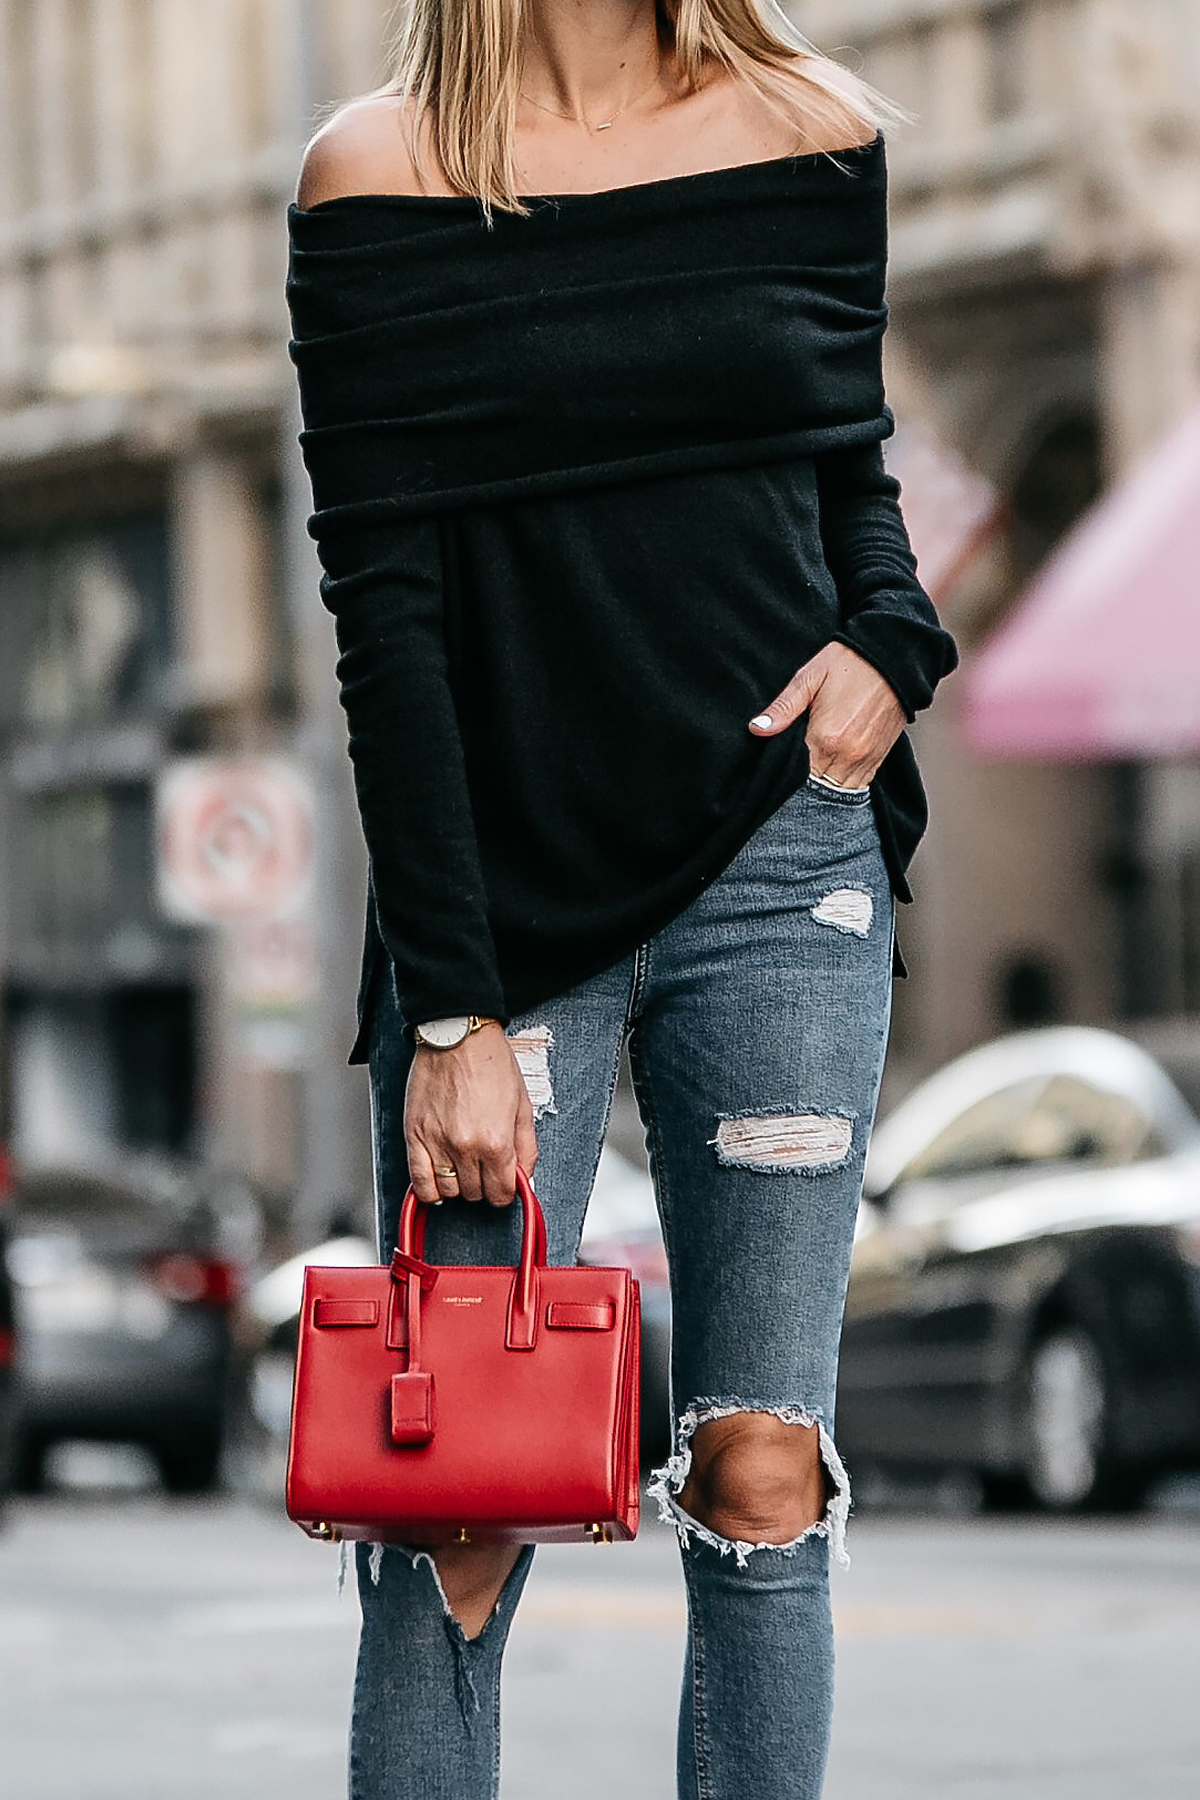 Black off-the-shoulder Sweater Denim Ripped Skinny Jeans Saint Laurent Red Sac De Jour Handbag Fashion Jackson Dallas Blogger Fashion Blogger Street Style